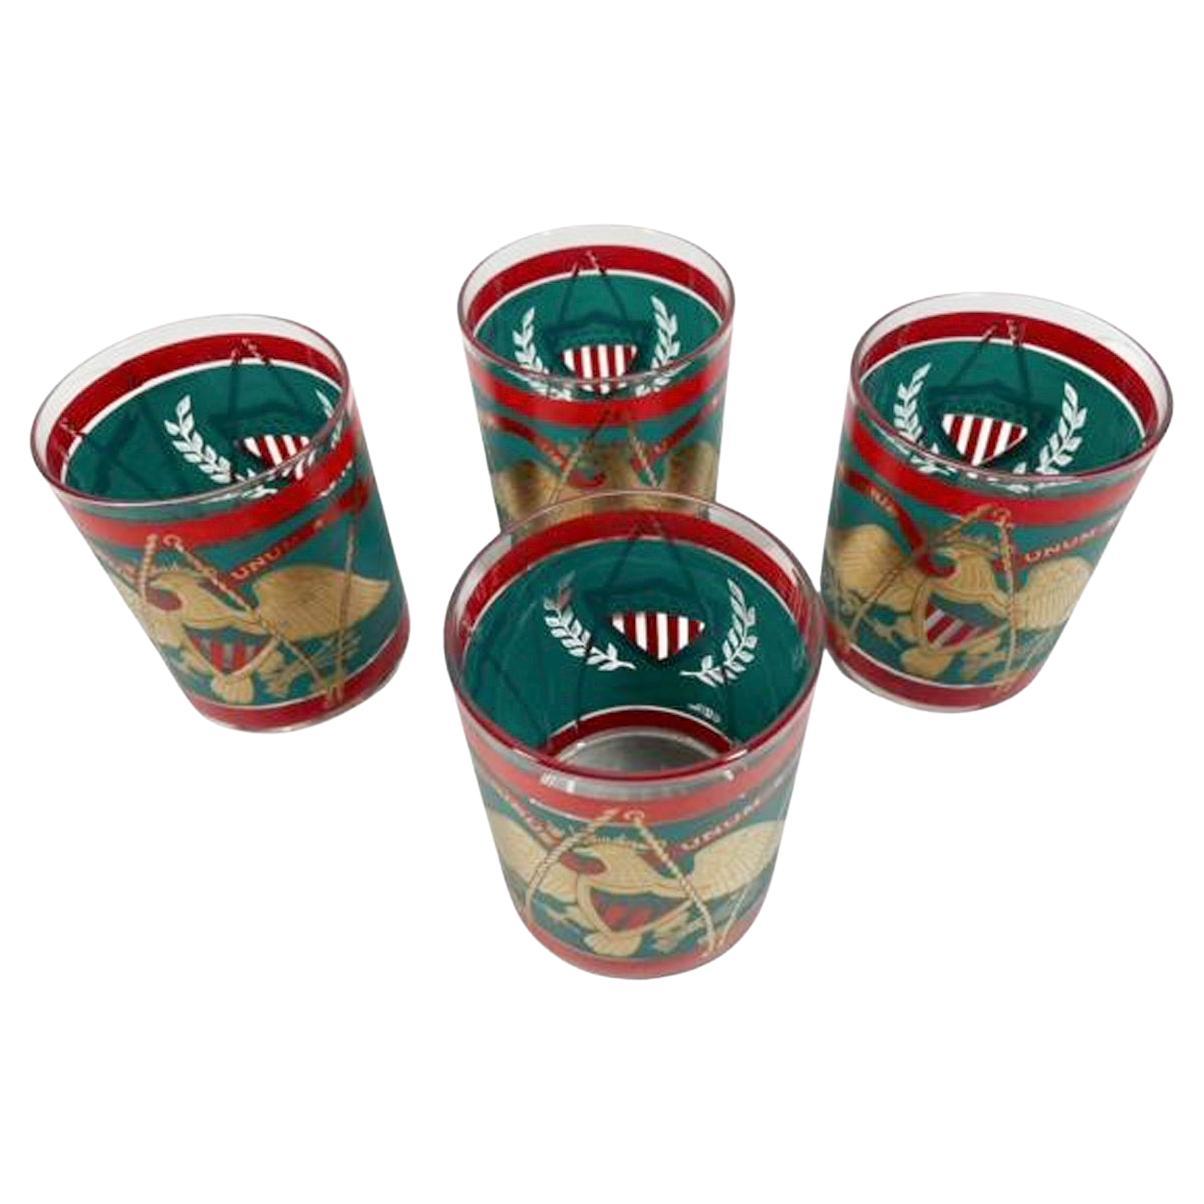 Four Vintage Cera Parade Drum Rocks Glasses with Eagle and Shield Design